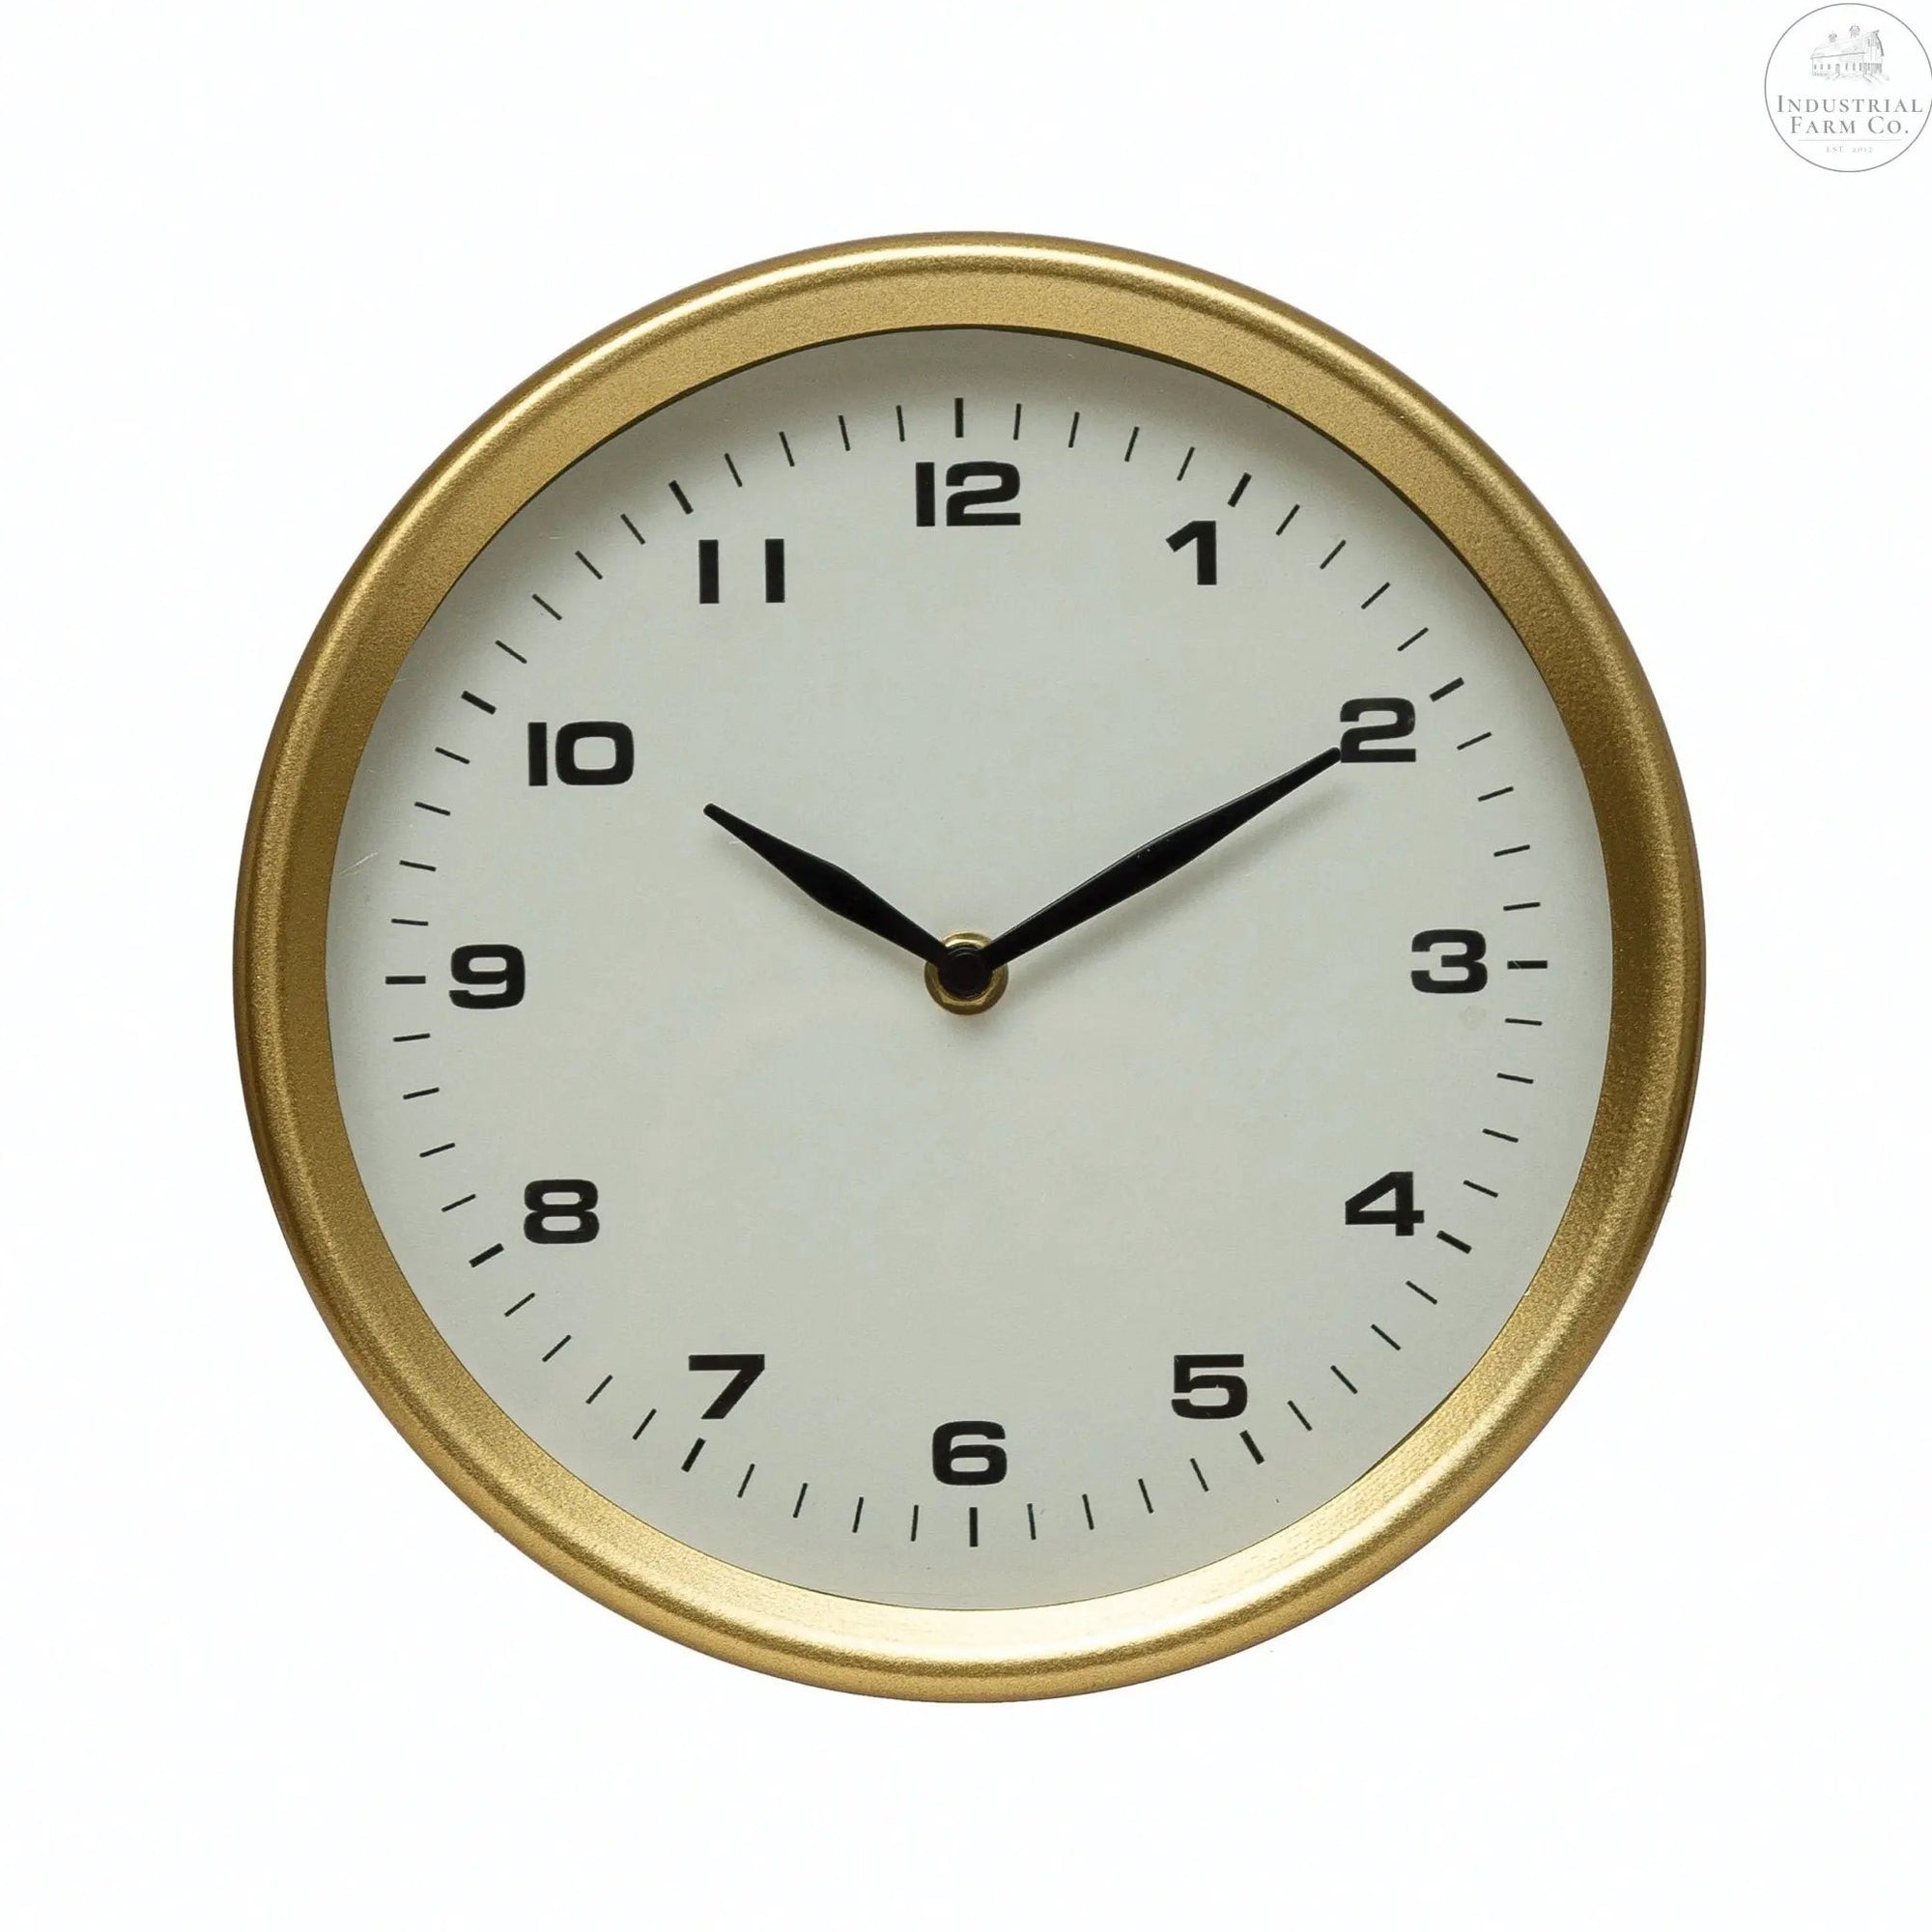 Modern Brass Standing Clock     | Industrial Farm Co